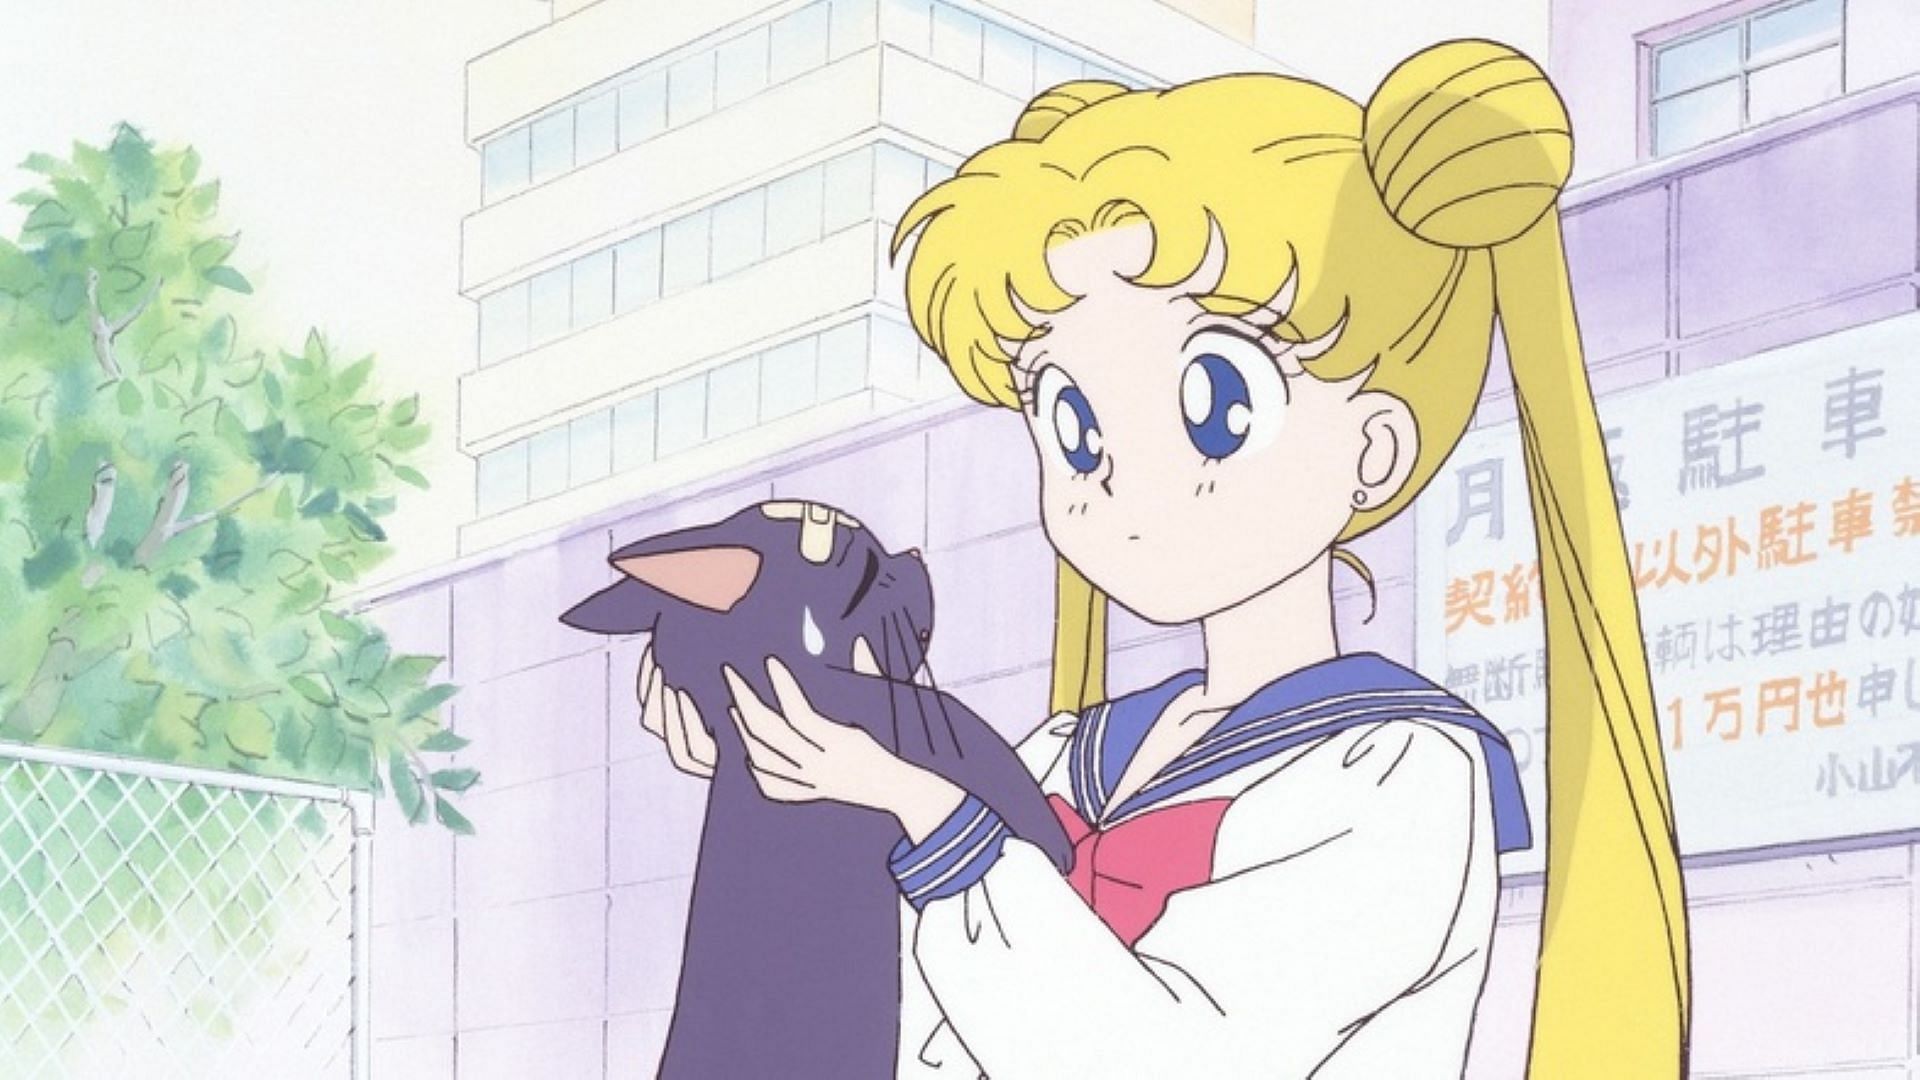 Usagi and Luna (Image via Toei Animation)